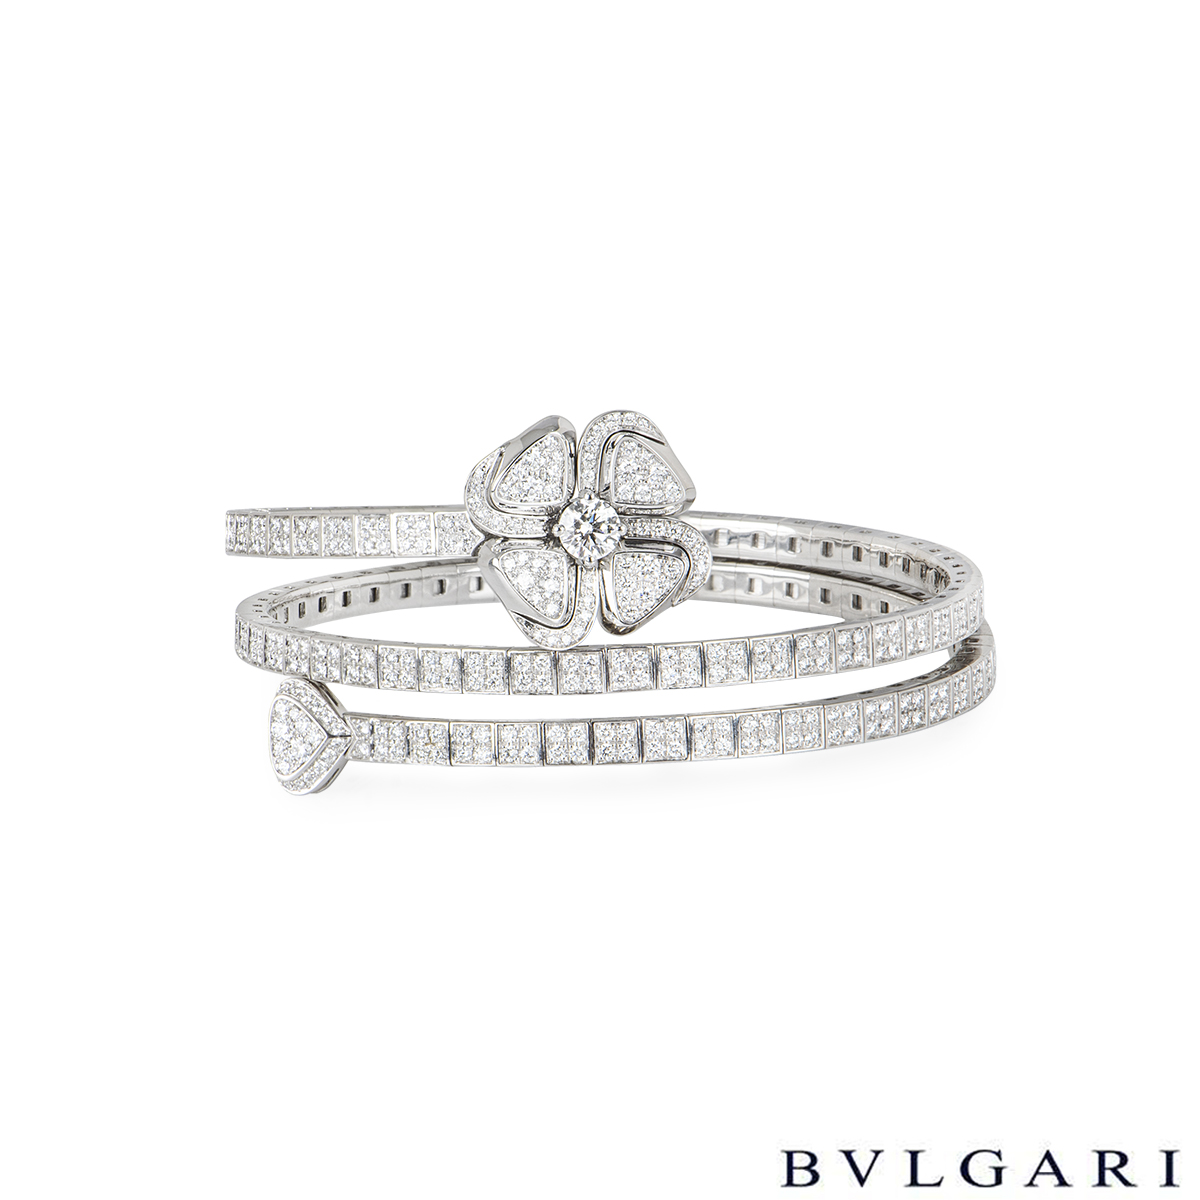 Bulgari Fiorever Bracelet in White Gold with Diamonds, L